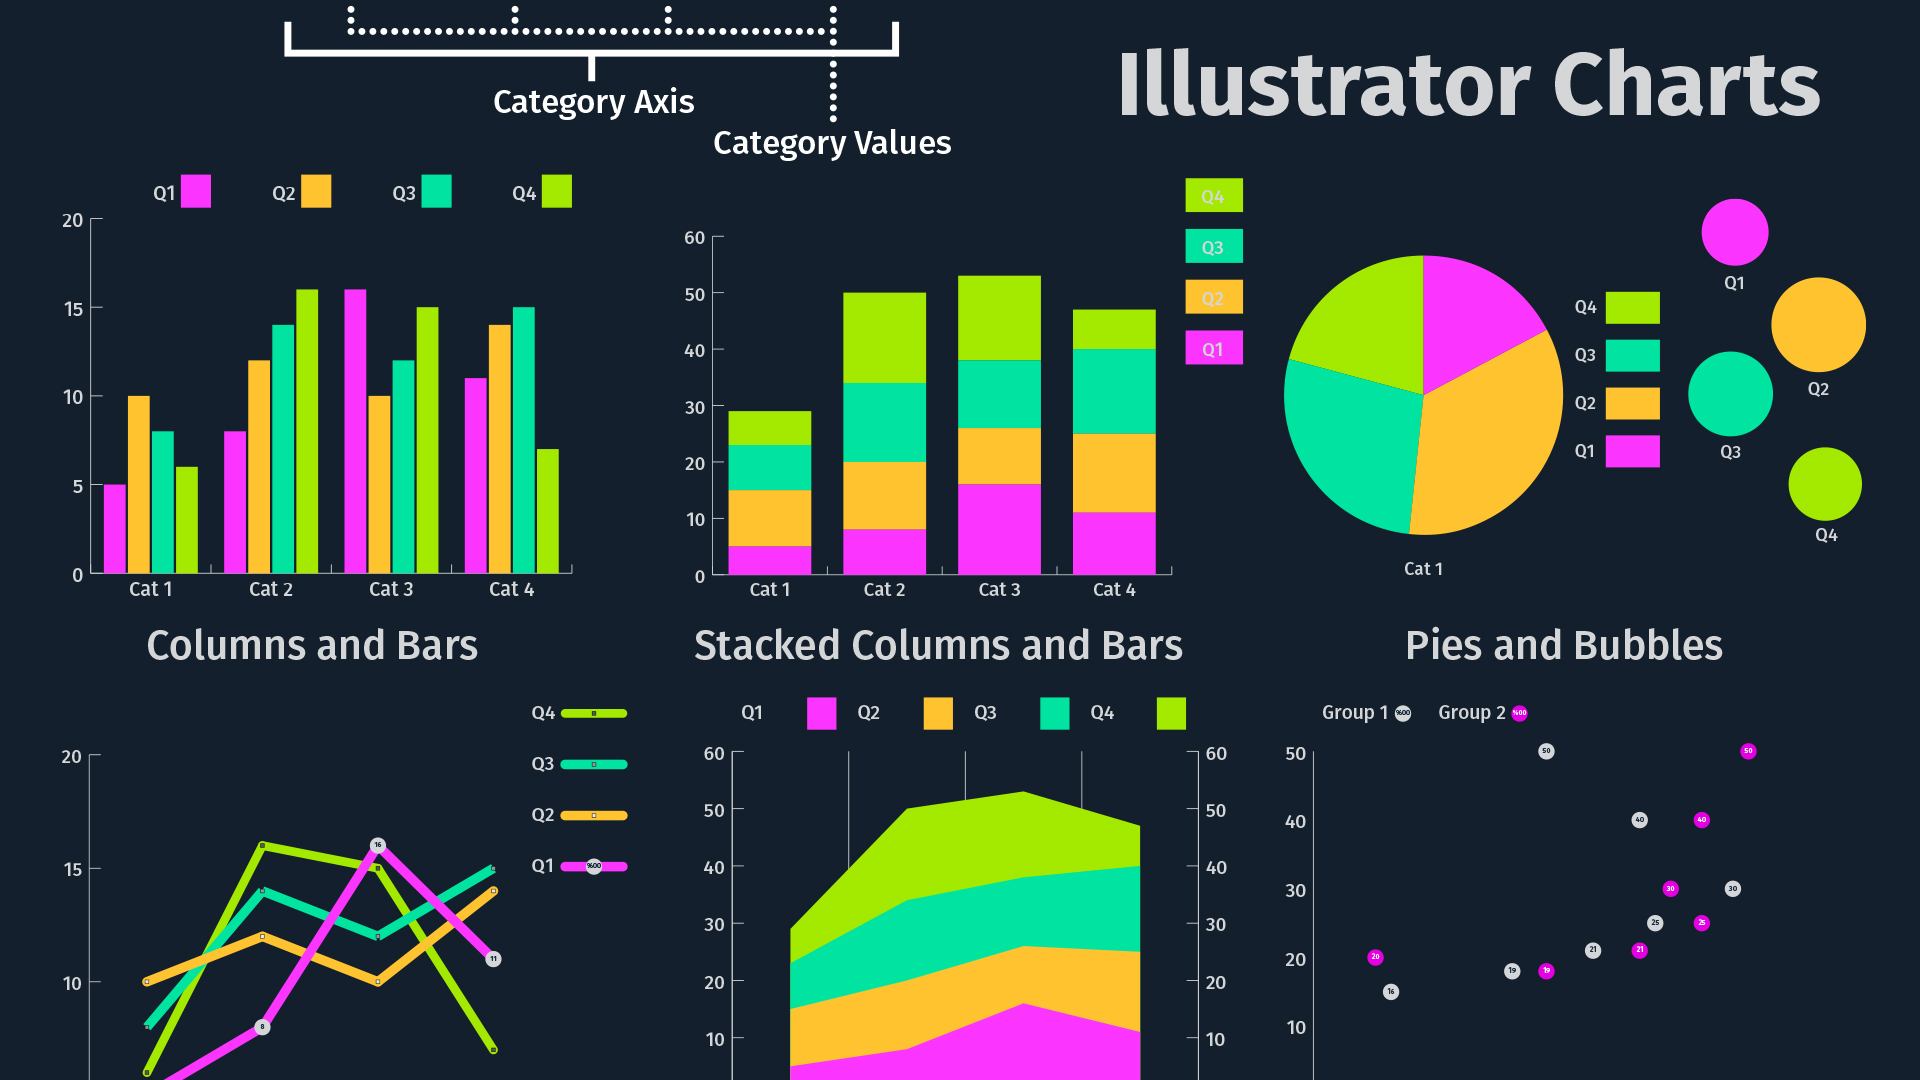 creating infographic in illustrator